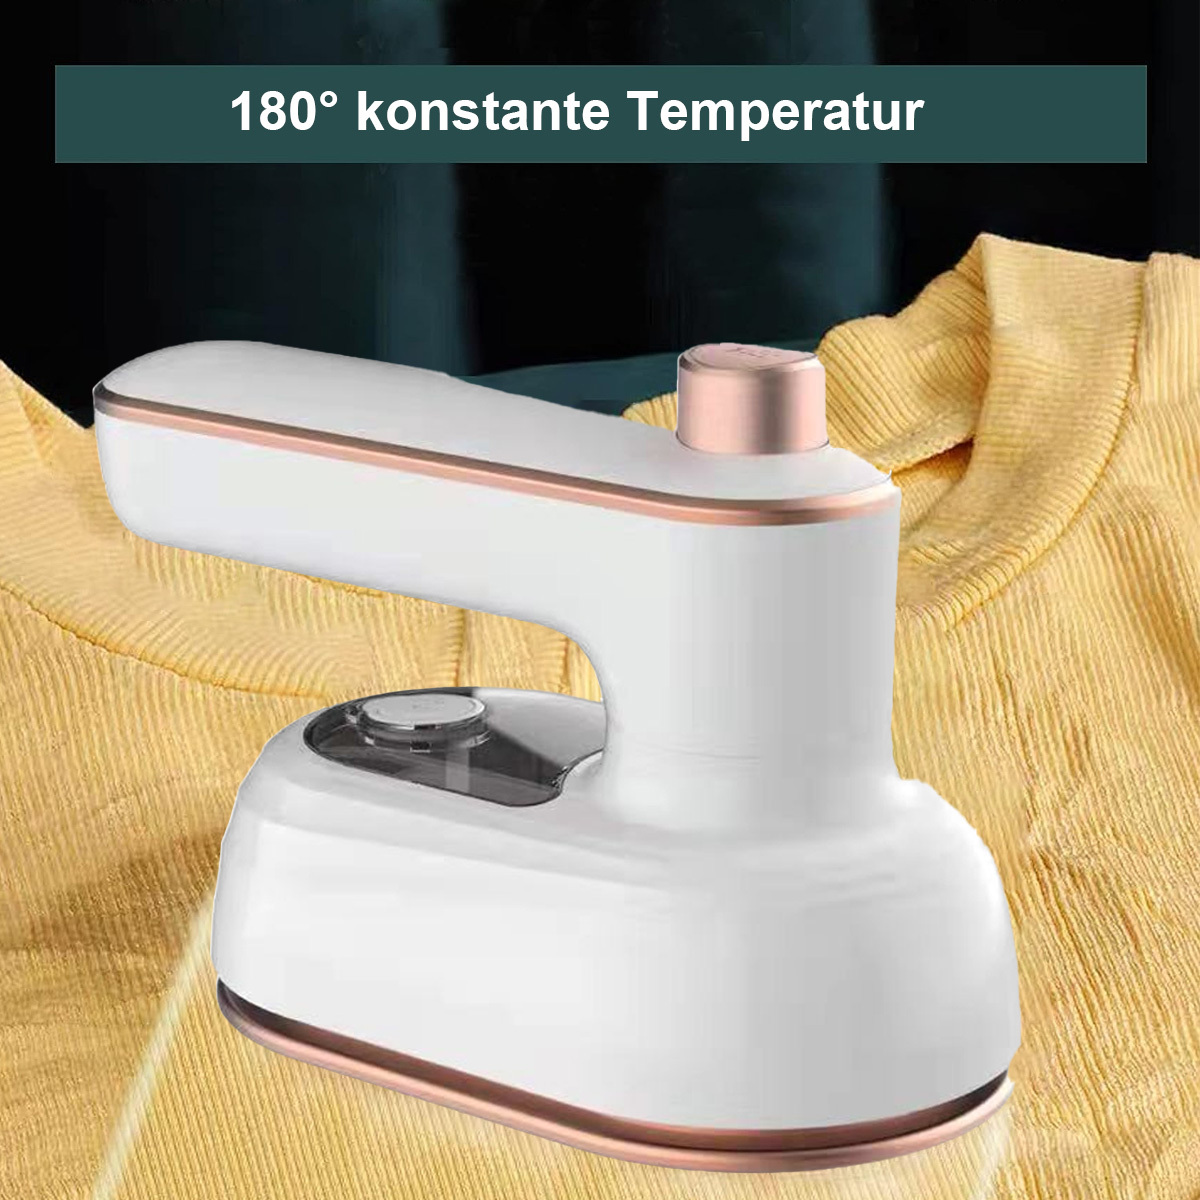 ELKUAIE Professionelle Modepflege Titan-Grundplatte) Dampfbügelstation (38 Watt